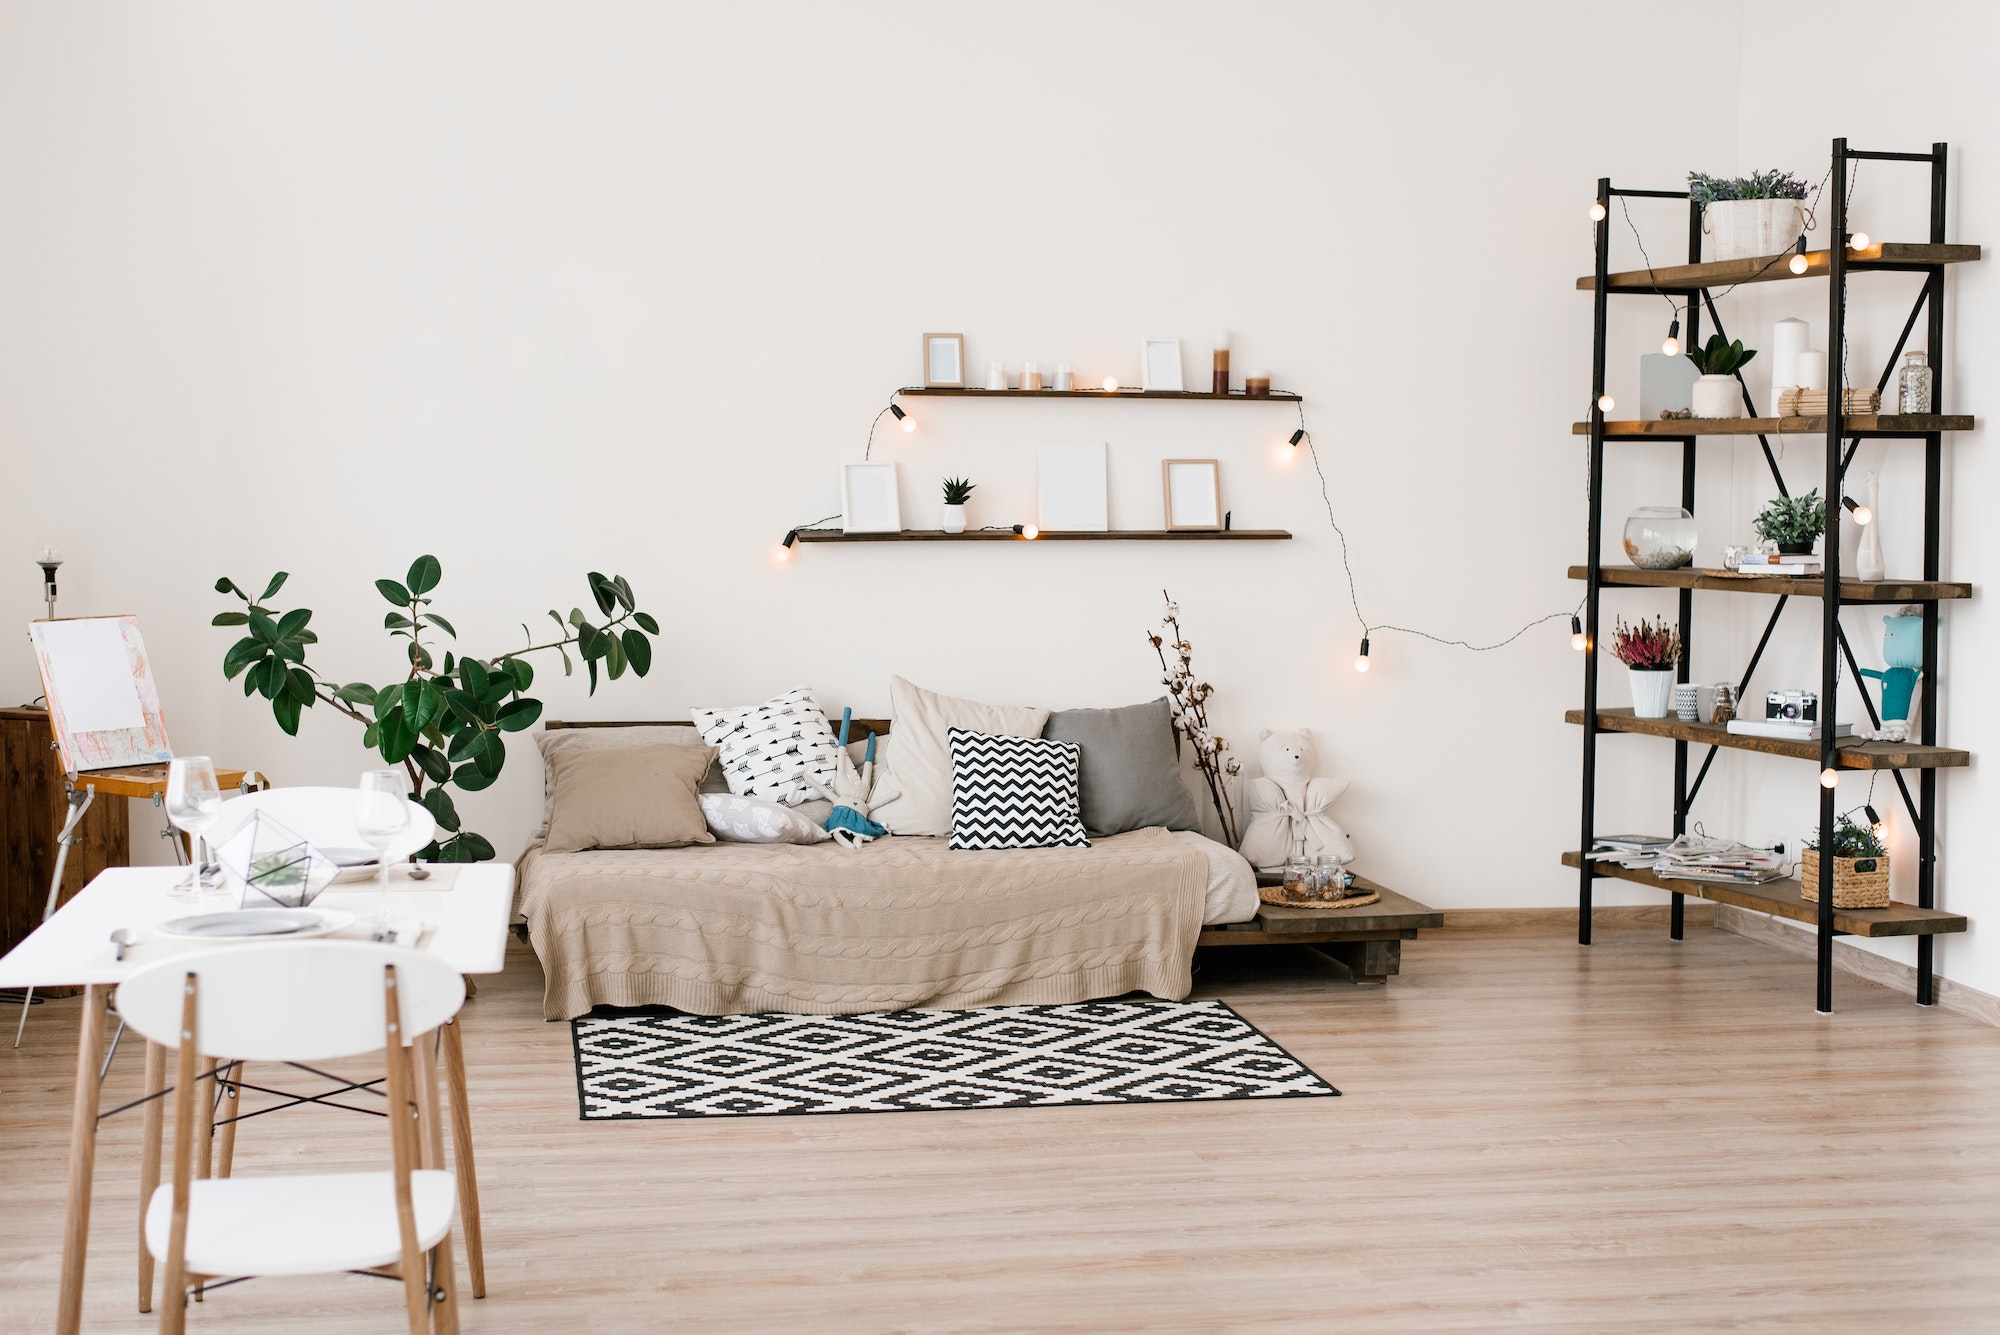 Stylish scandinavian living room with furniture, plants. Modern decor of bright room